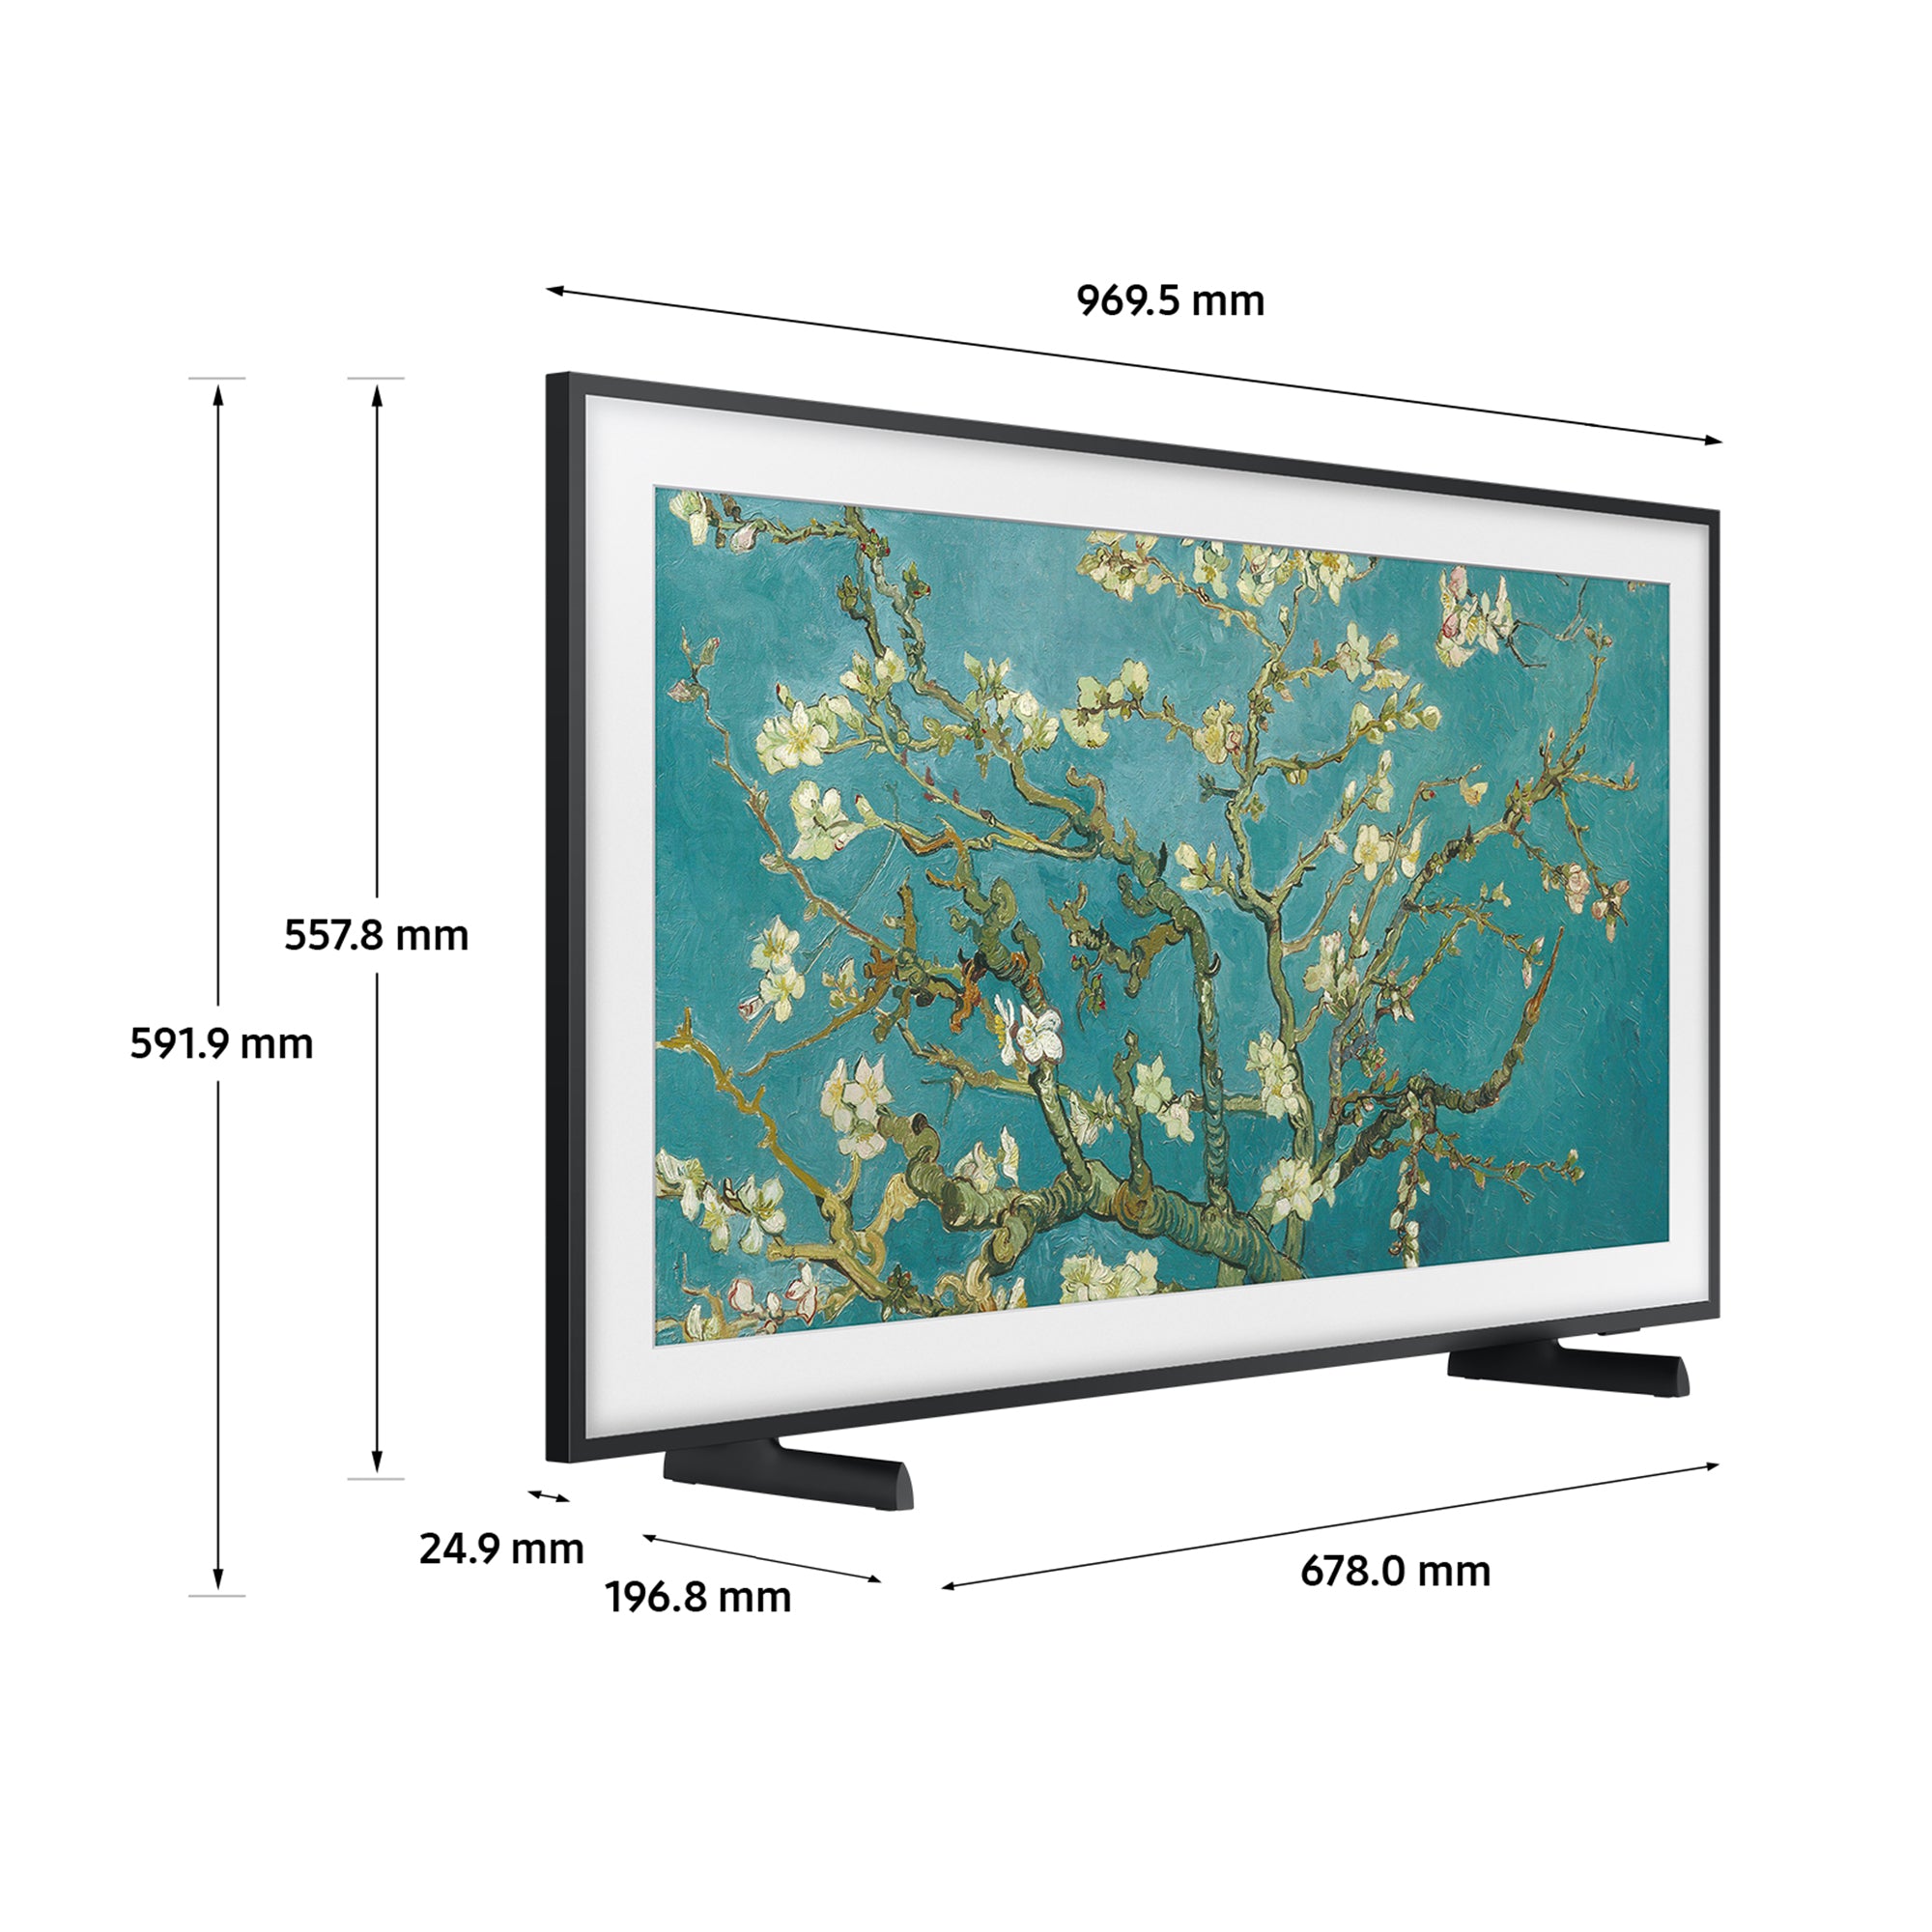 Samsung 43" The Frame Art Mode 4K HDR QLED Smart TV - Black | QE43LS03BGUXXU